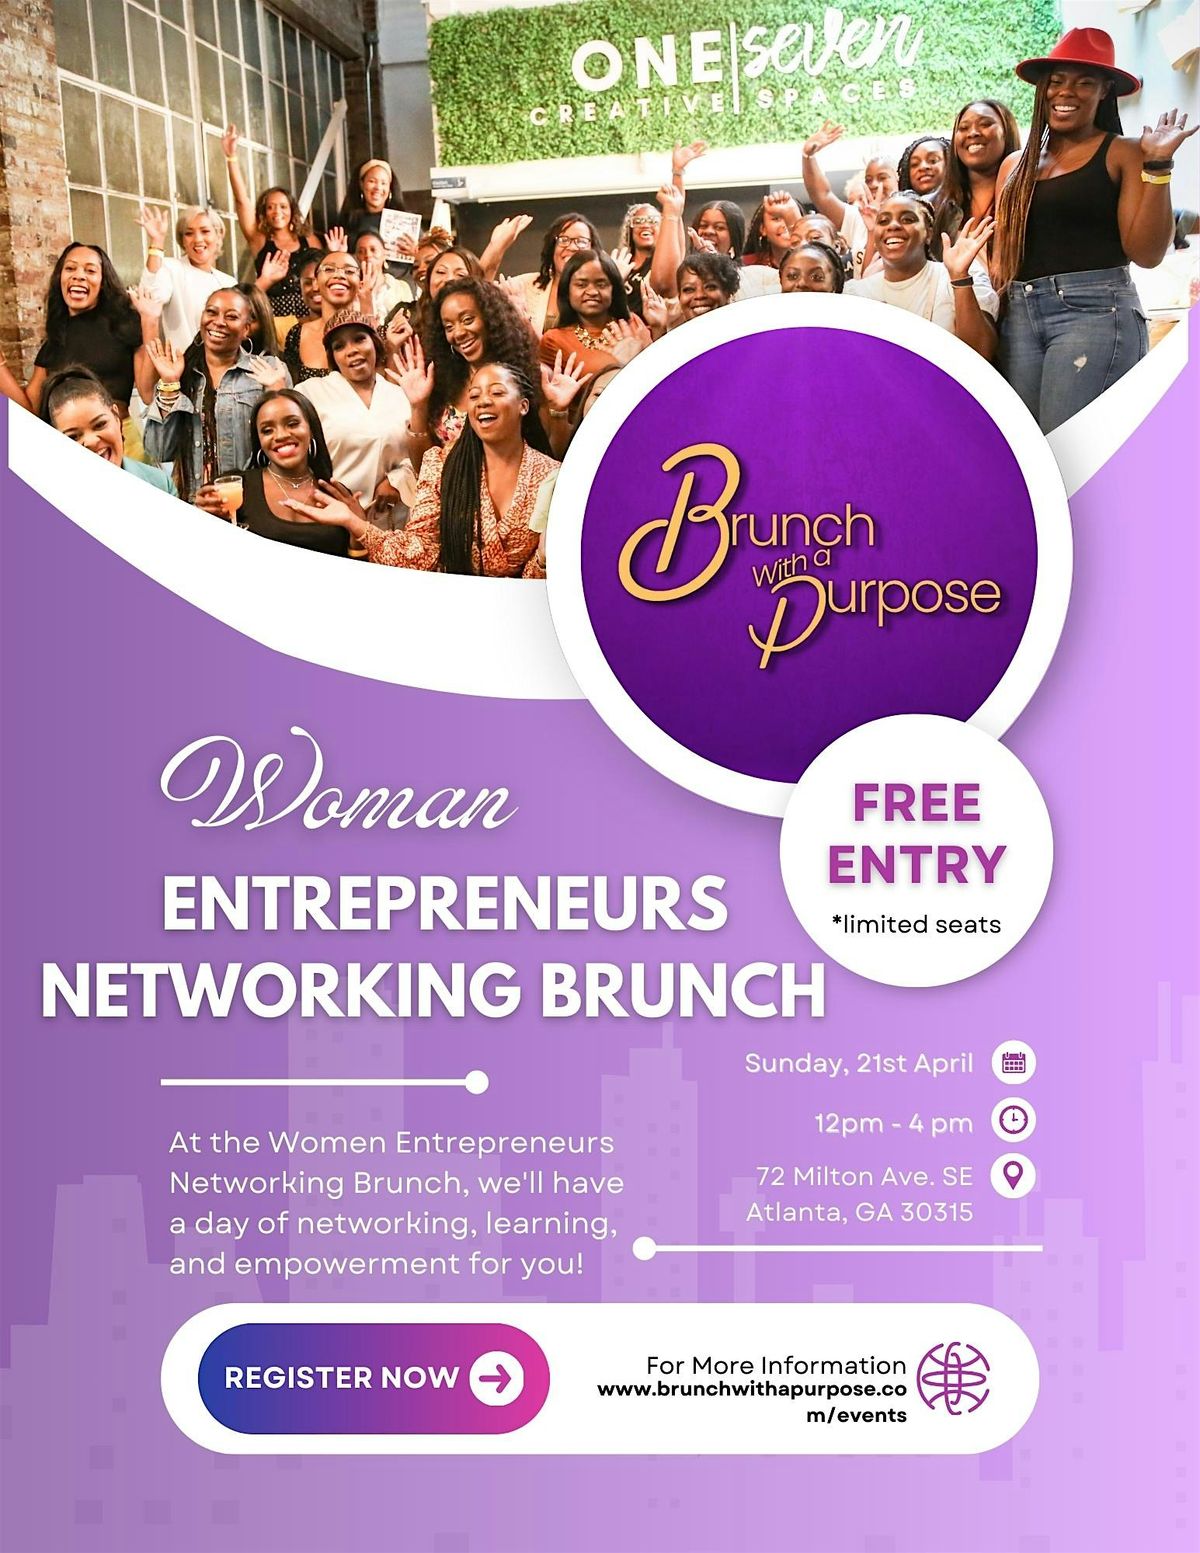 Woman Entrepreneurs Networking Brunch